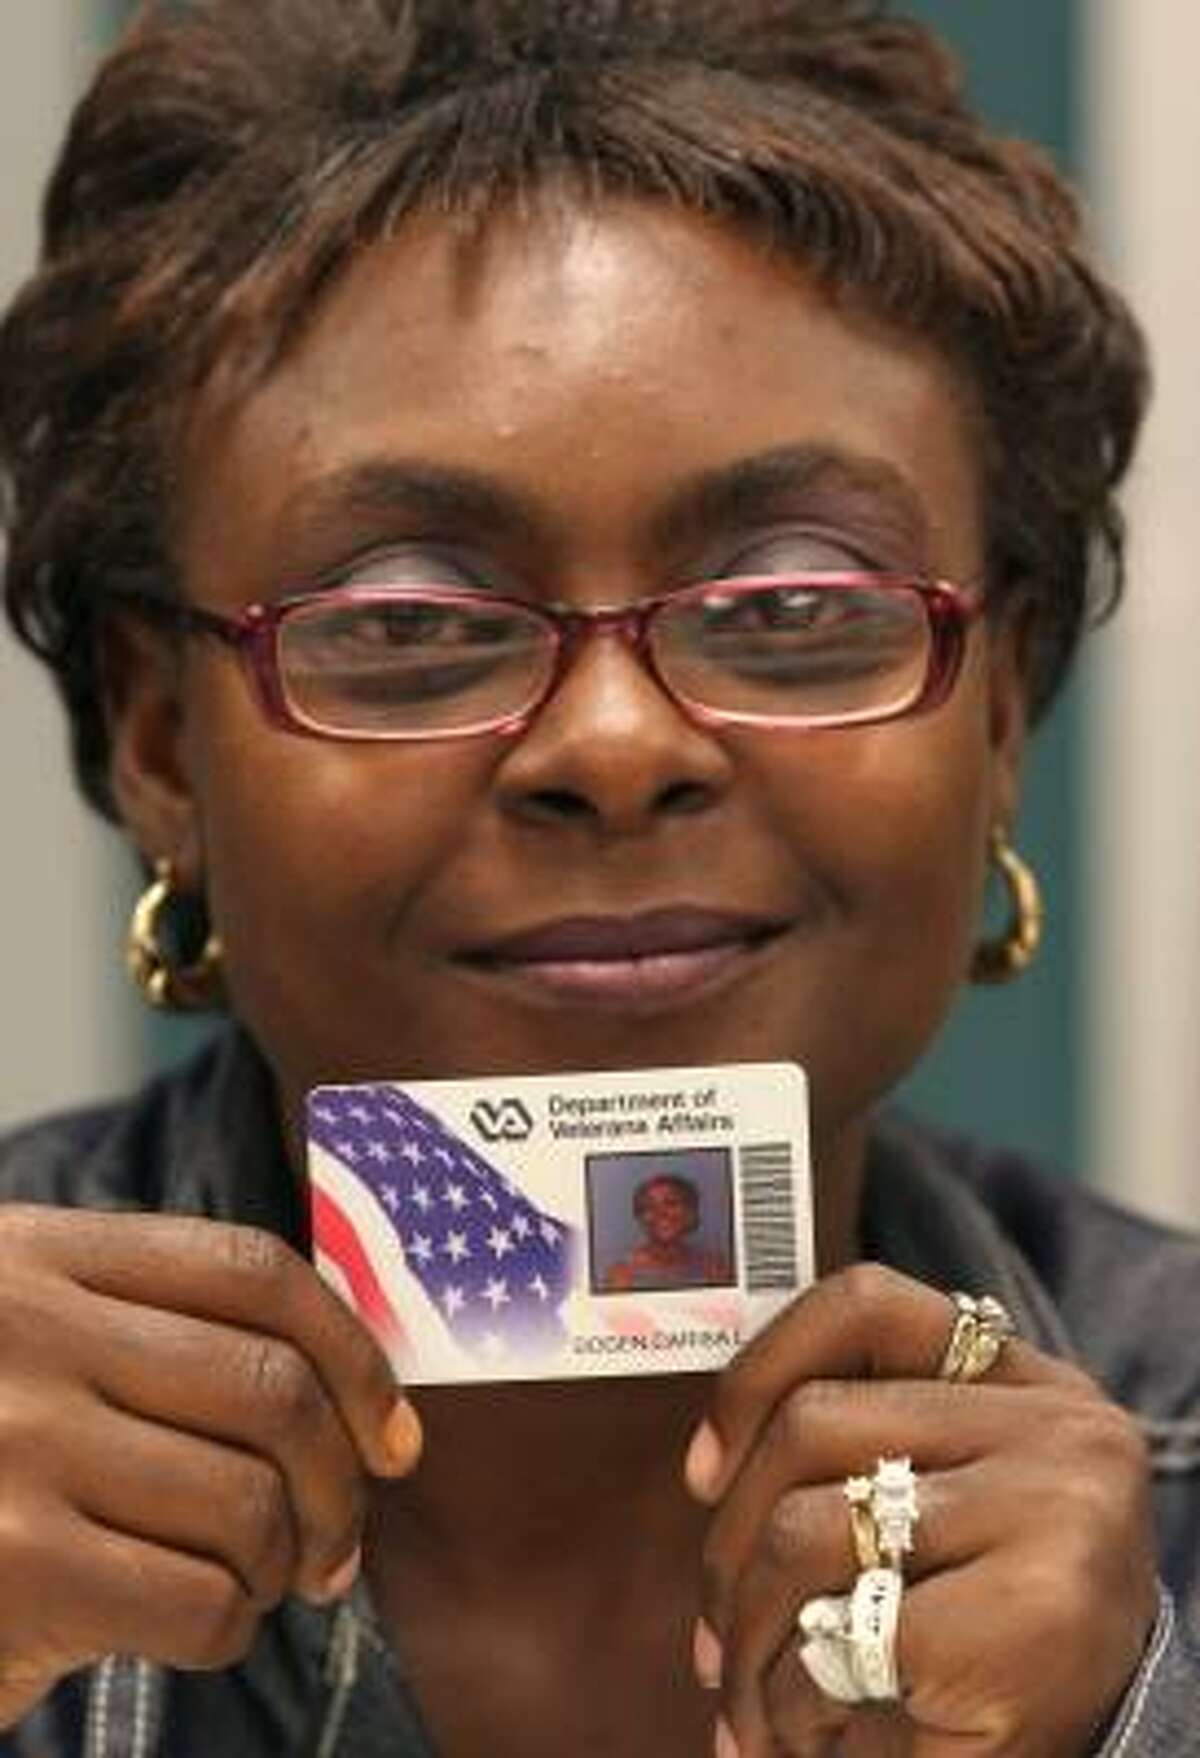 Carisa Dogen shows her Veterans Affairs ID card in Dayton, Ohio.